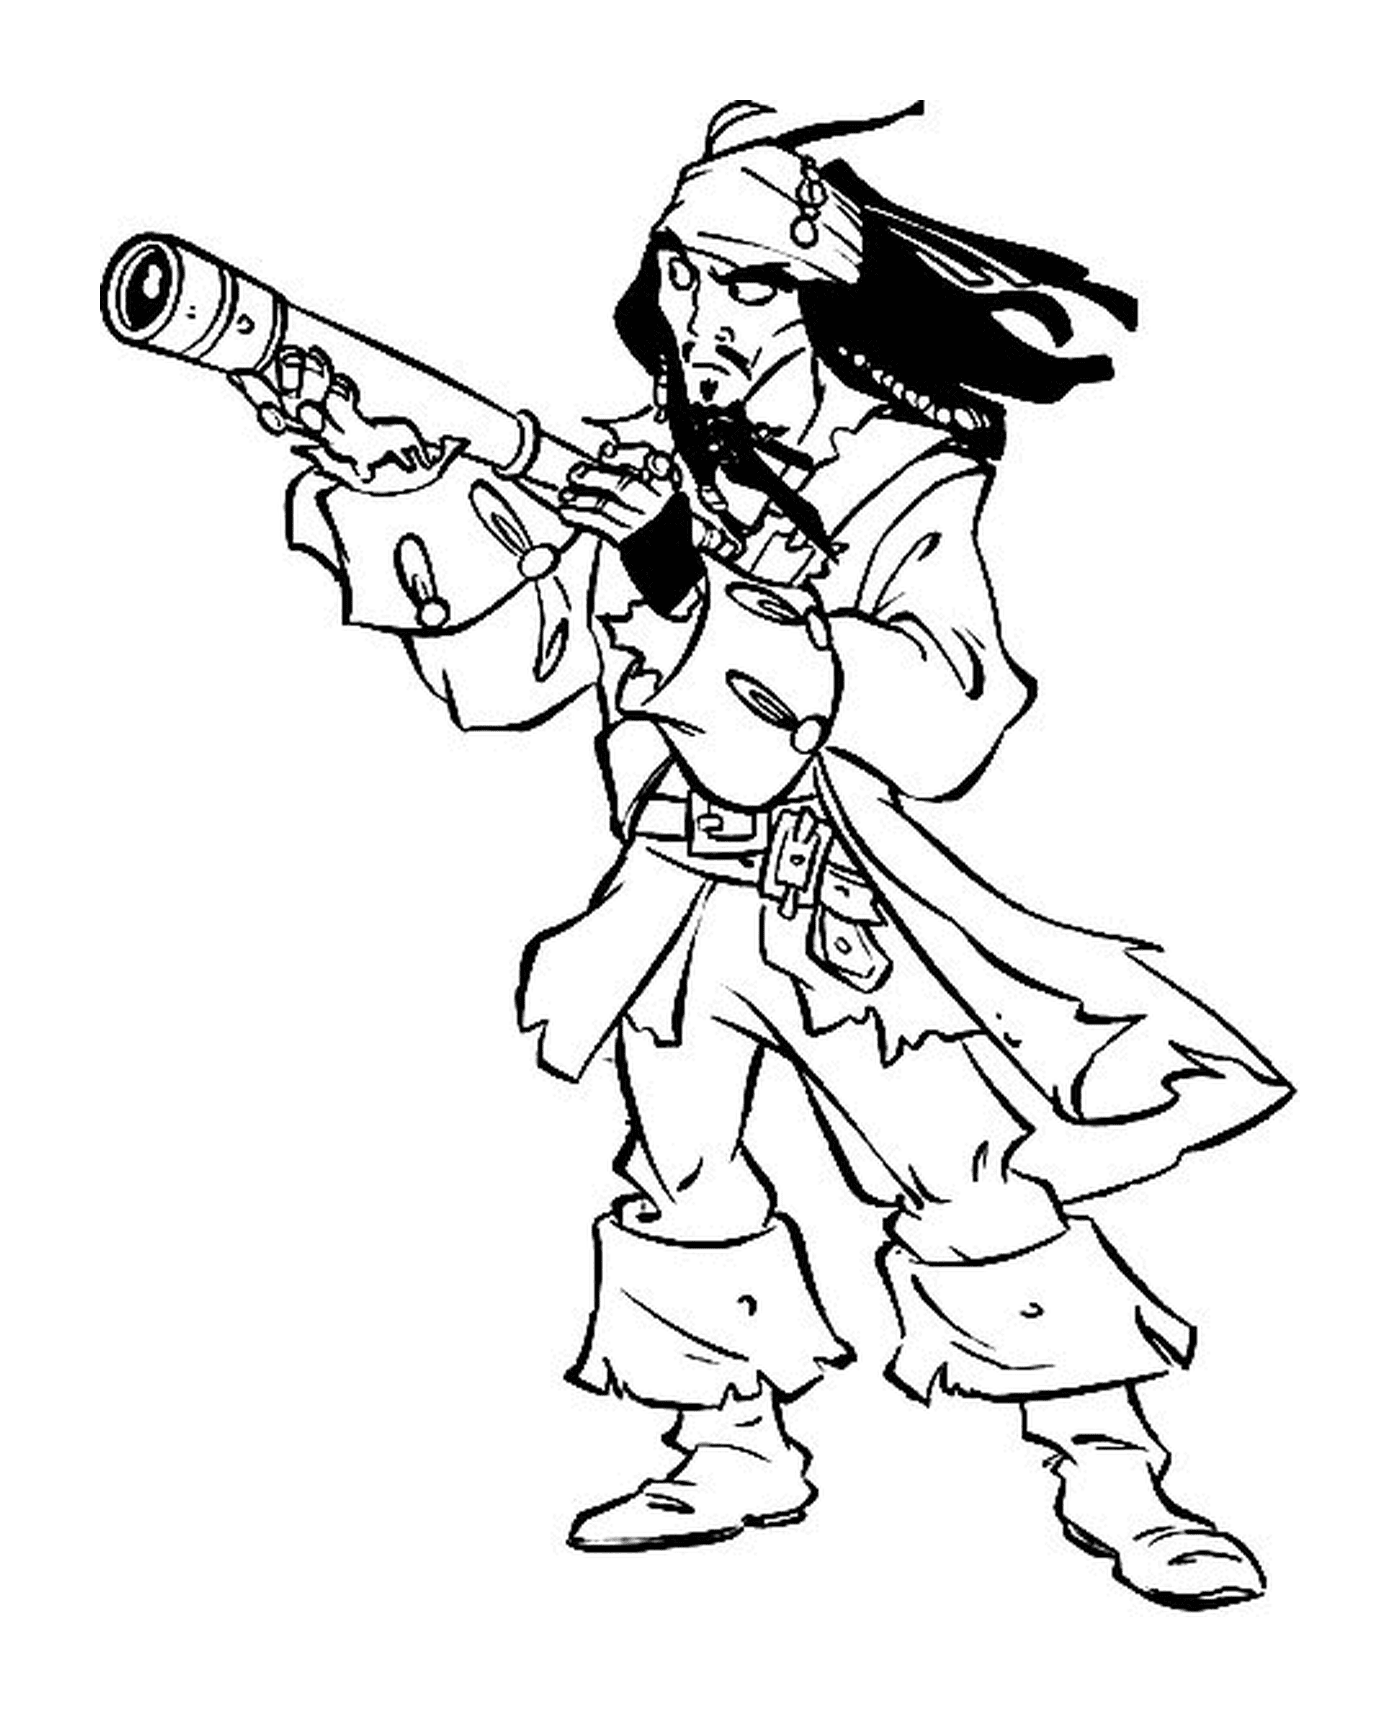 Jack Sparrow avec sa longue vue